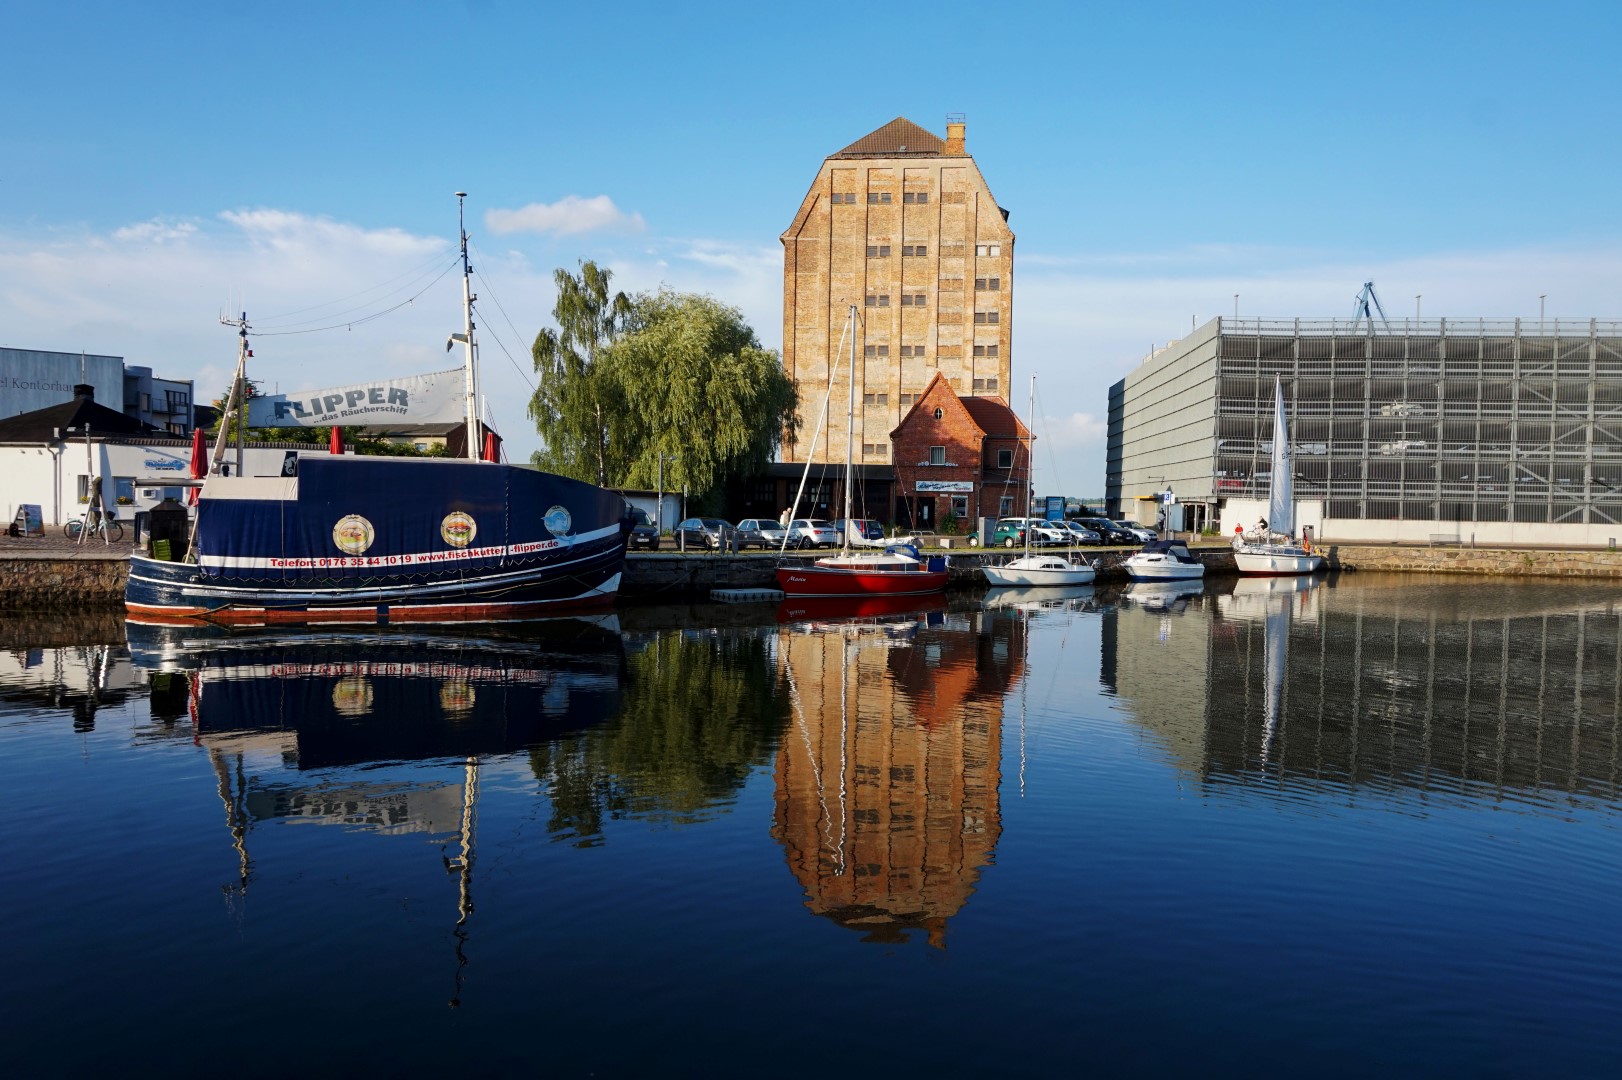 Un jour à Stralsund - City Guide - Blog voyage